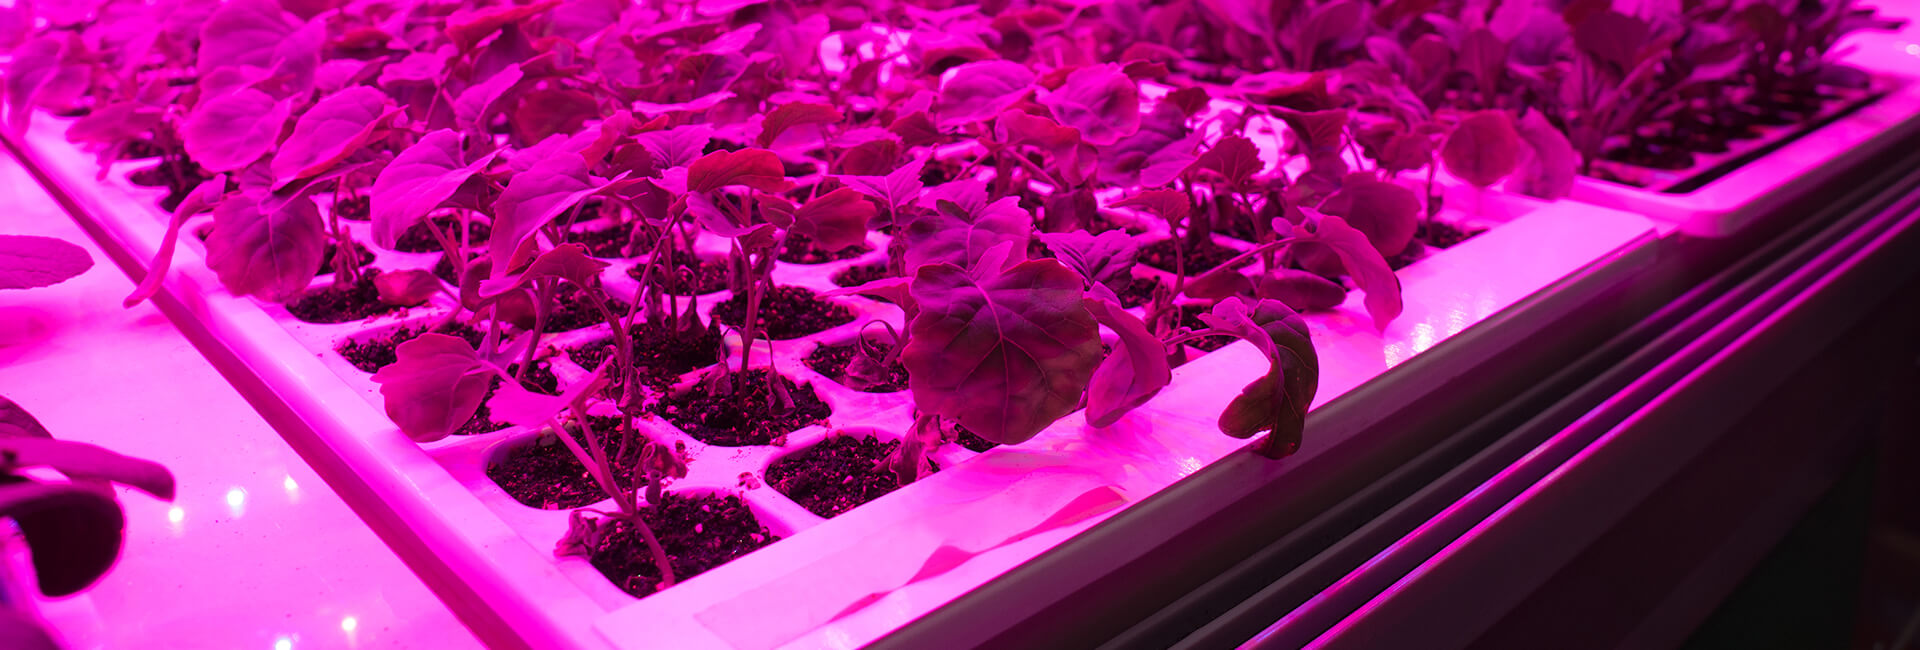 Lettuce growing under hydrophonic lights